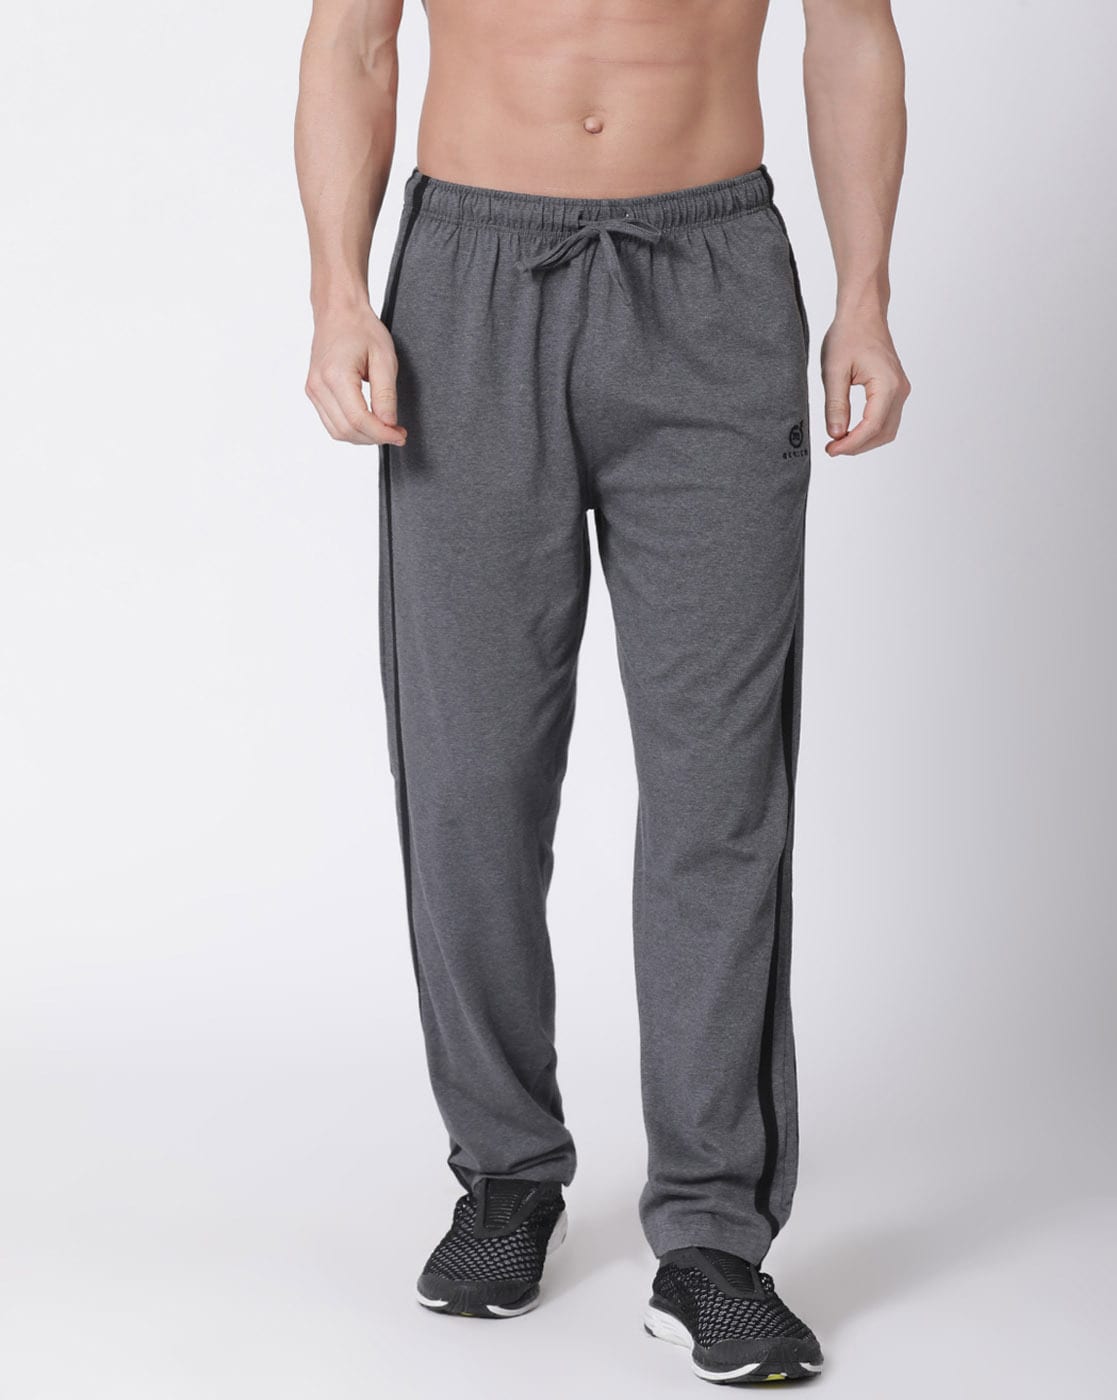 Macroman MSeries Mens Regular Fit Track Pants ME025BlackS   Amazonin Clothing  Accessories